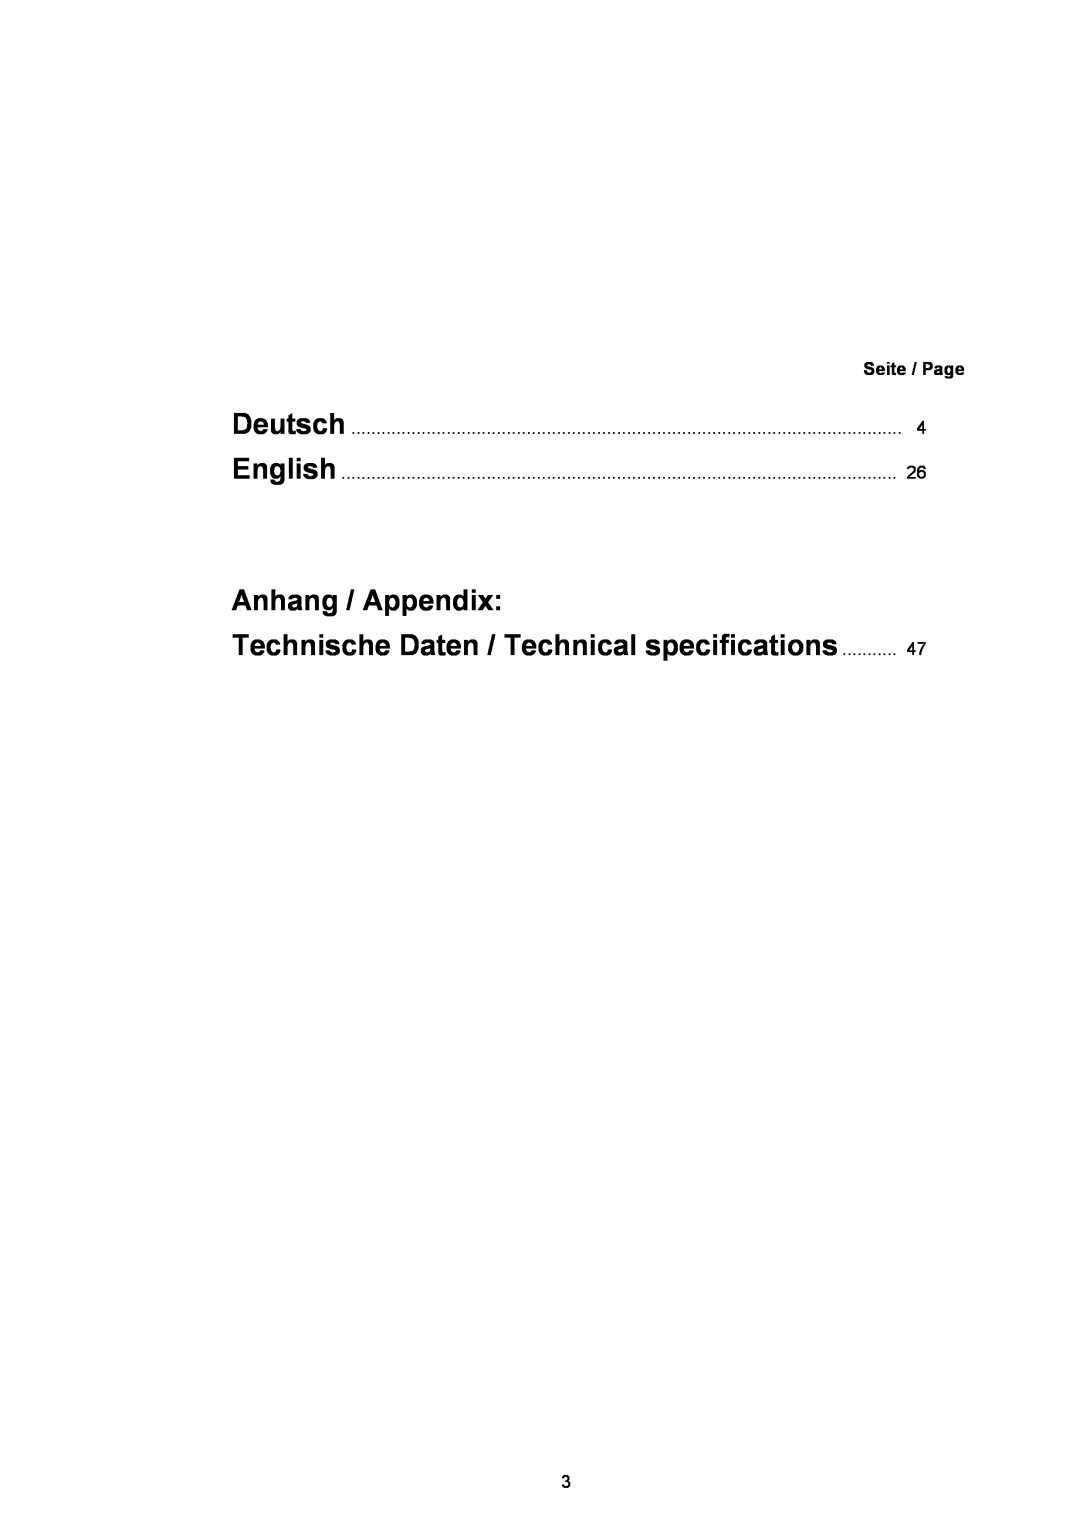 T+A Elektroakustik CC 820 M Deutsch, Anhang / Appendix, Technische Daten / Technical specifications, Seite / Page, English 